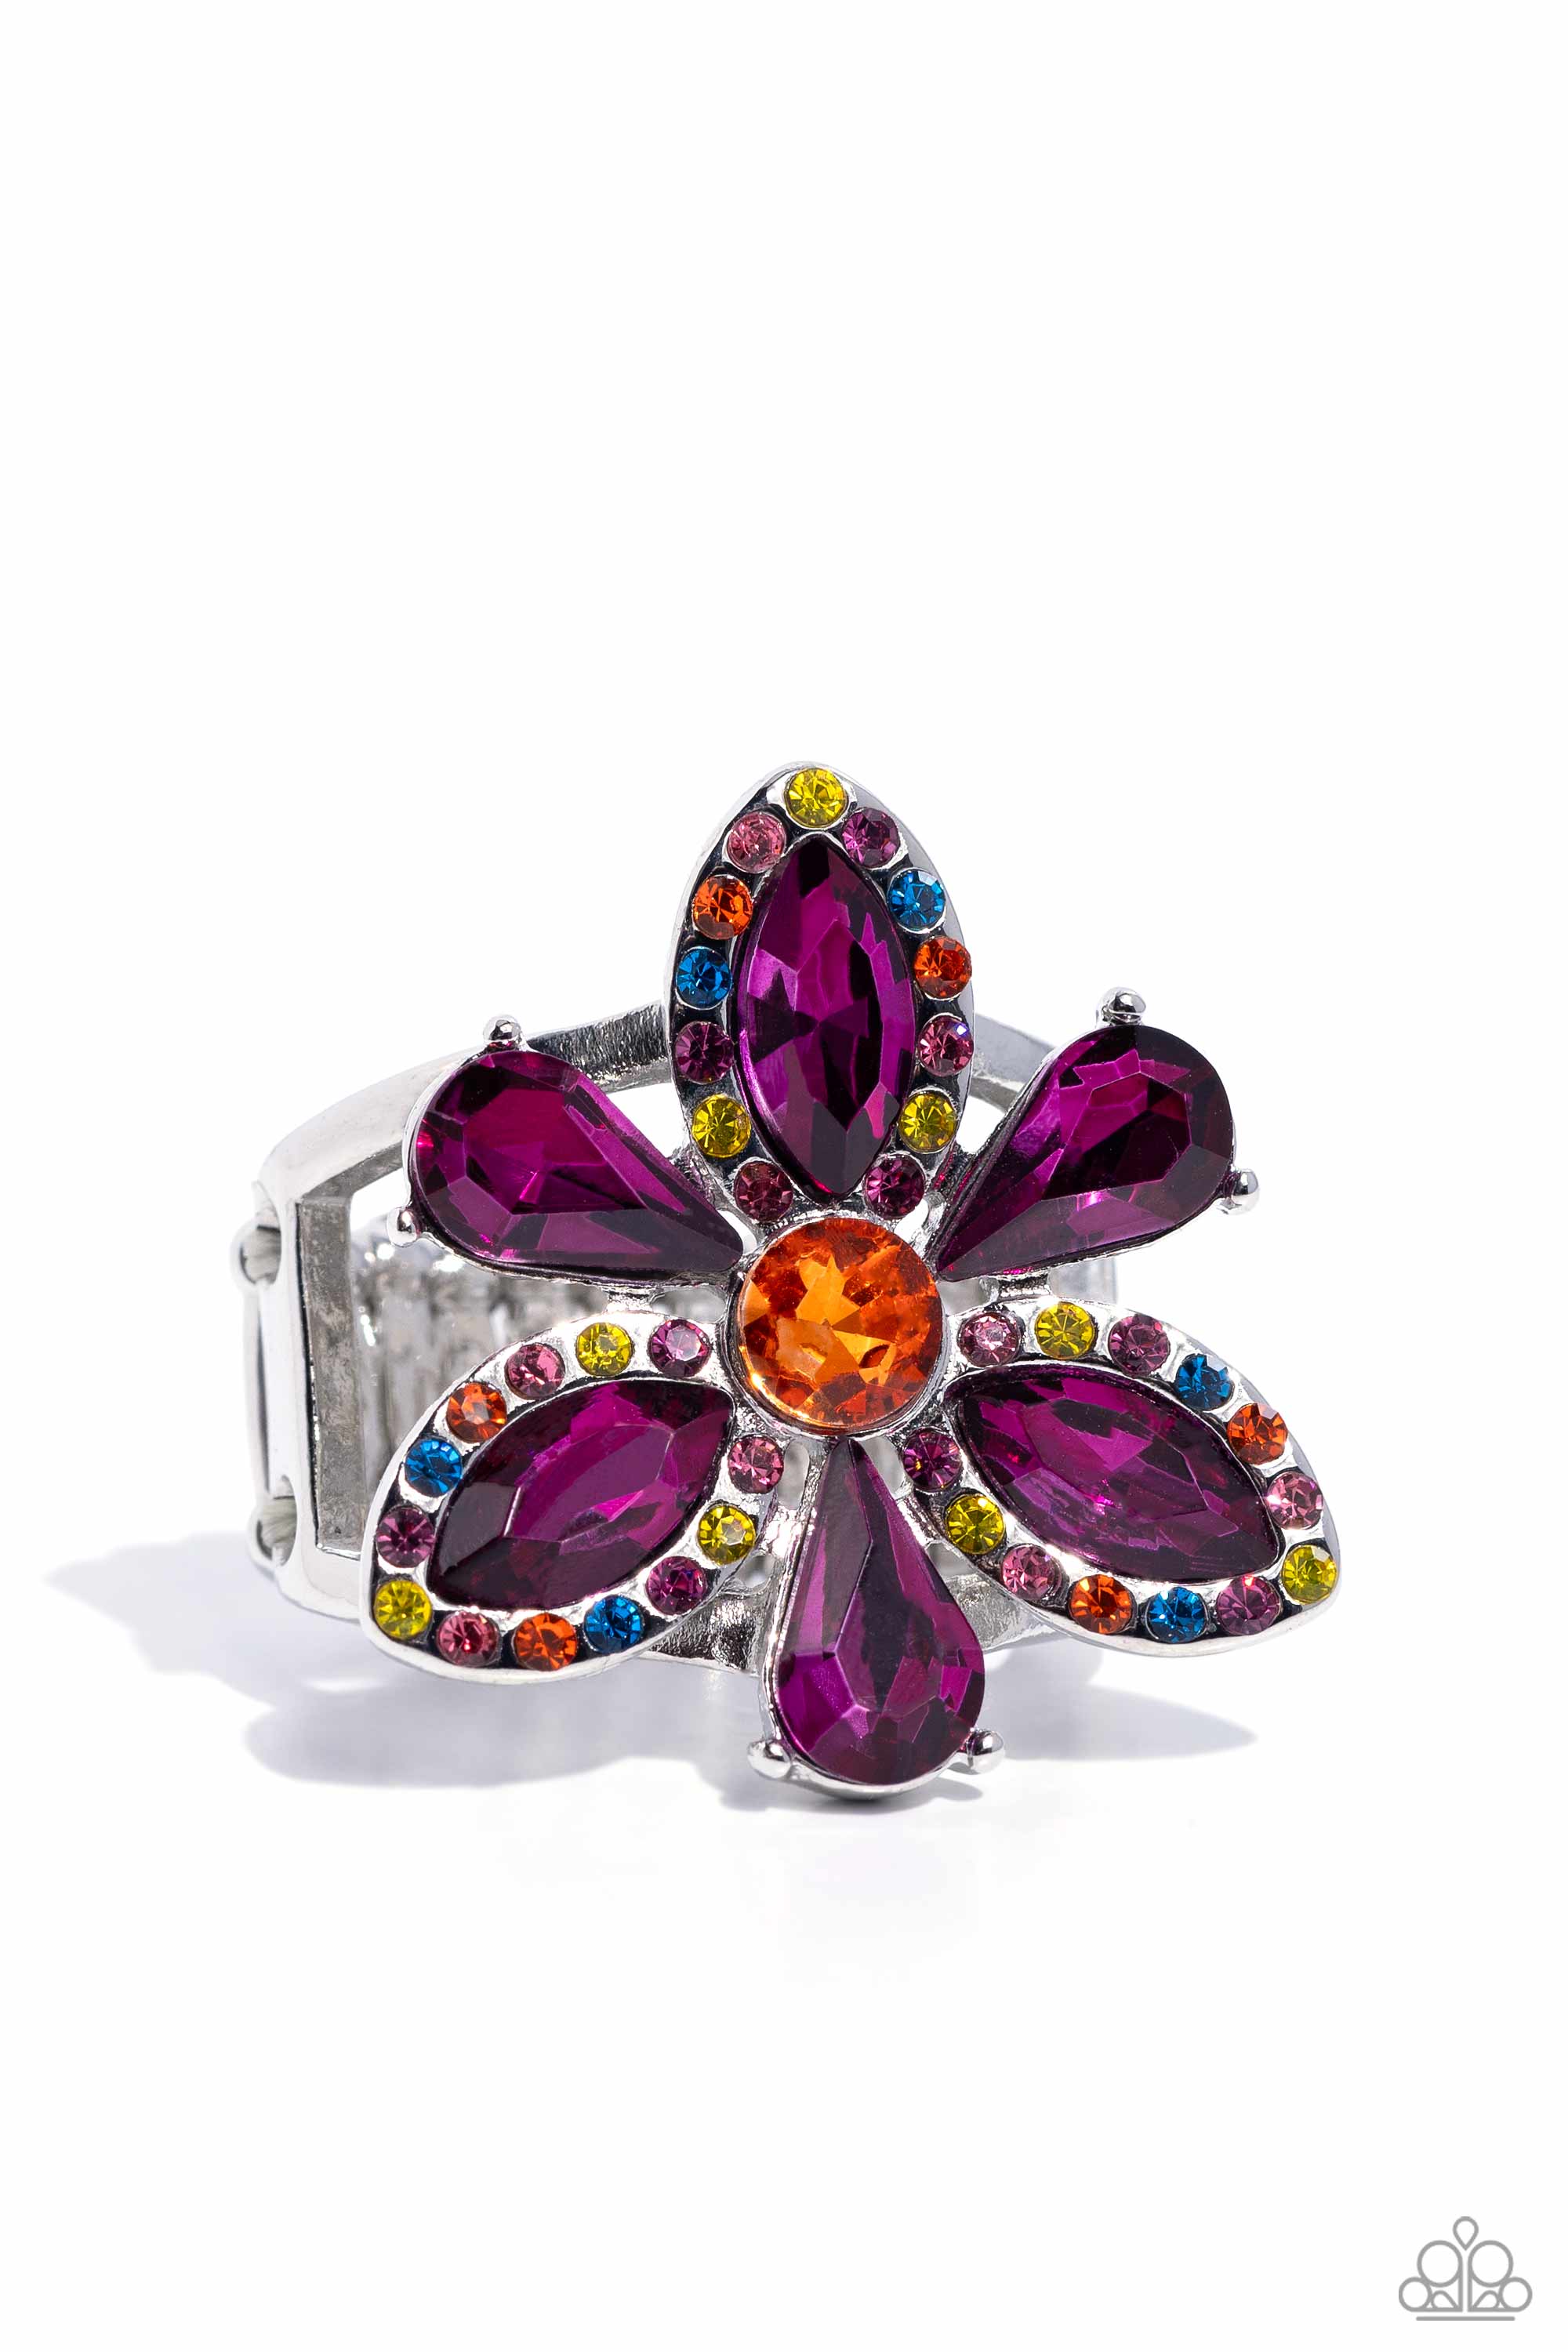 Blazing Blooms Multi & Purple Rhinestone Floral Ring - Paparazzi Accessories- lightbox - CarasShop.com - $5 Jewelry by Cara Jewels